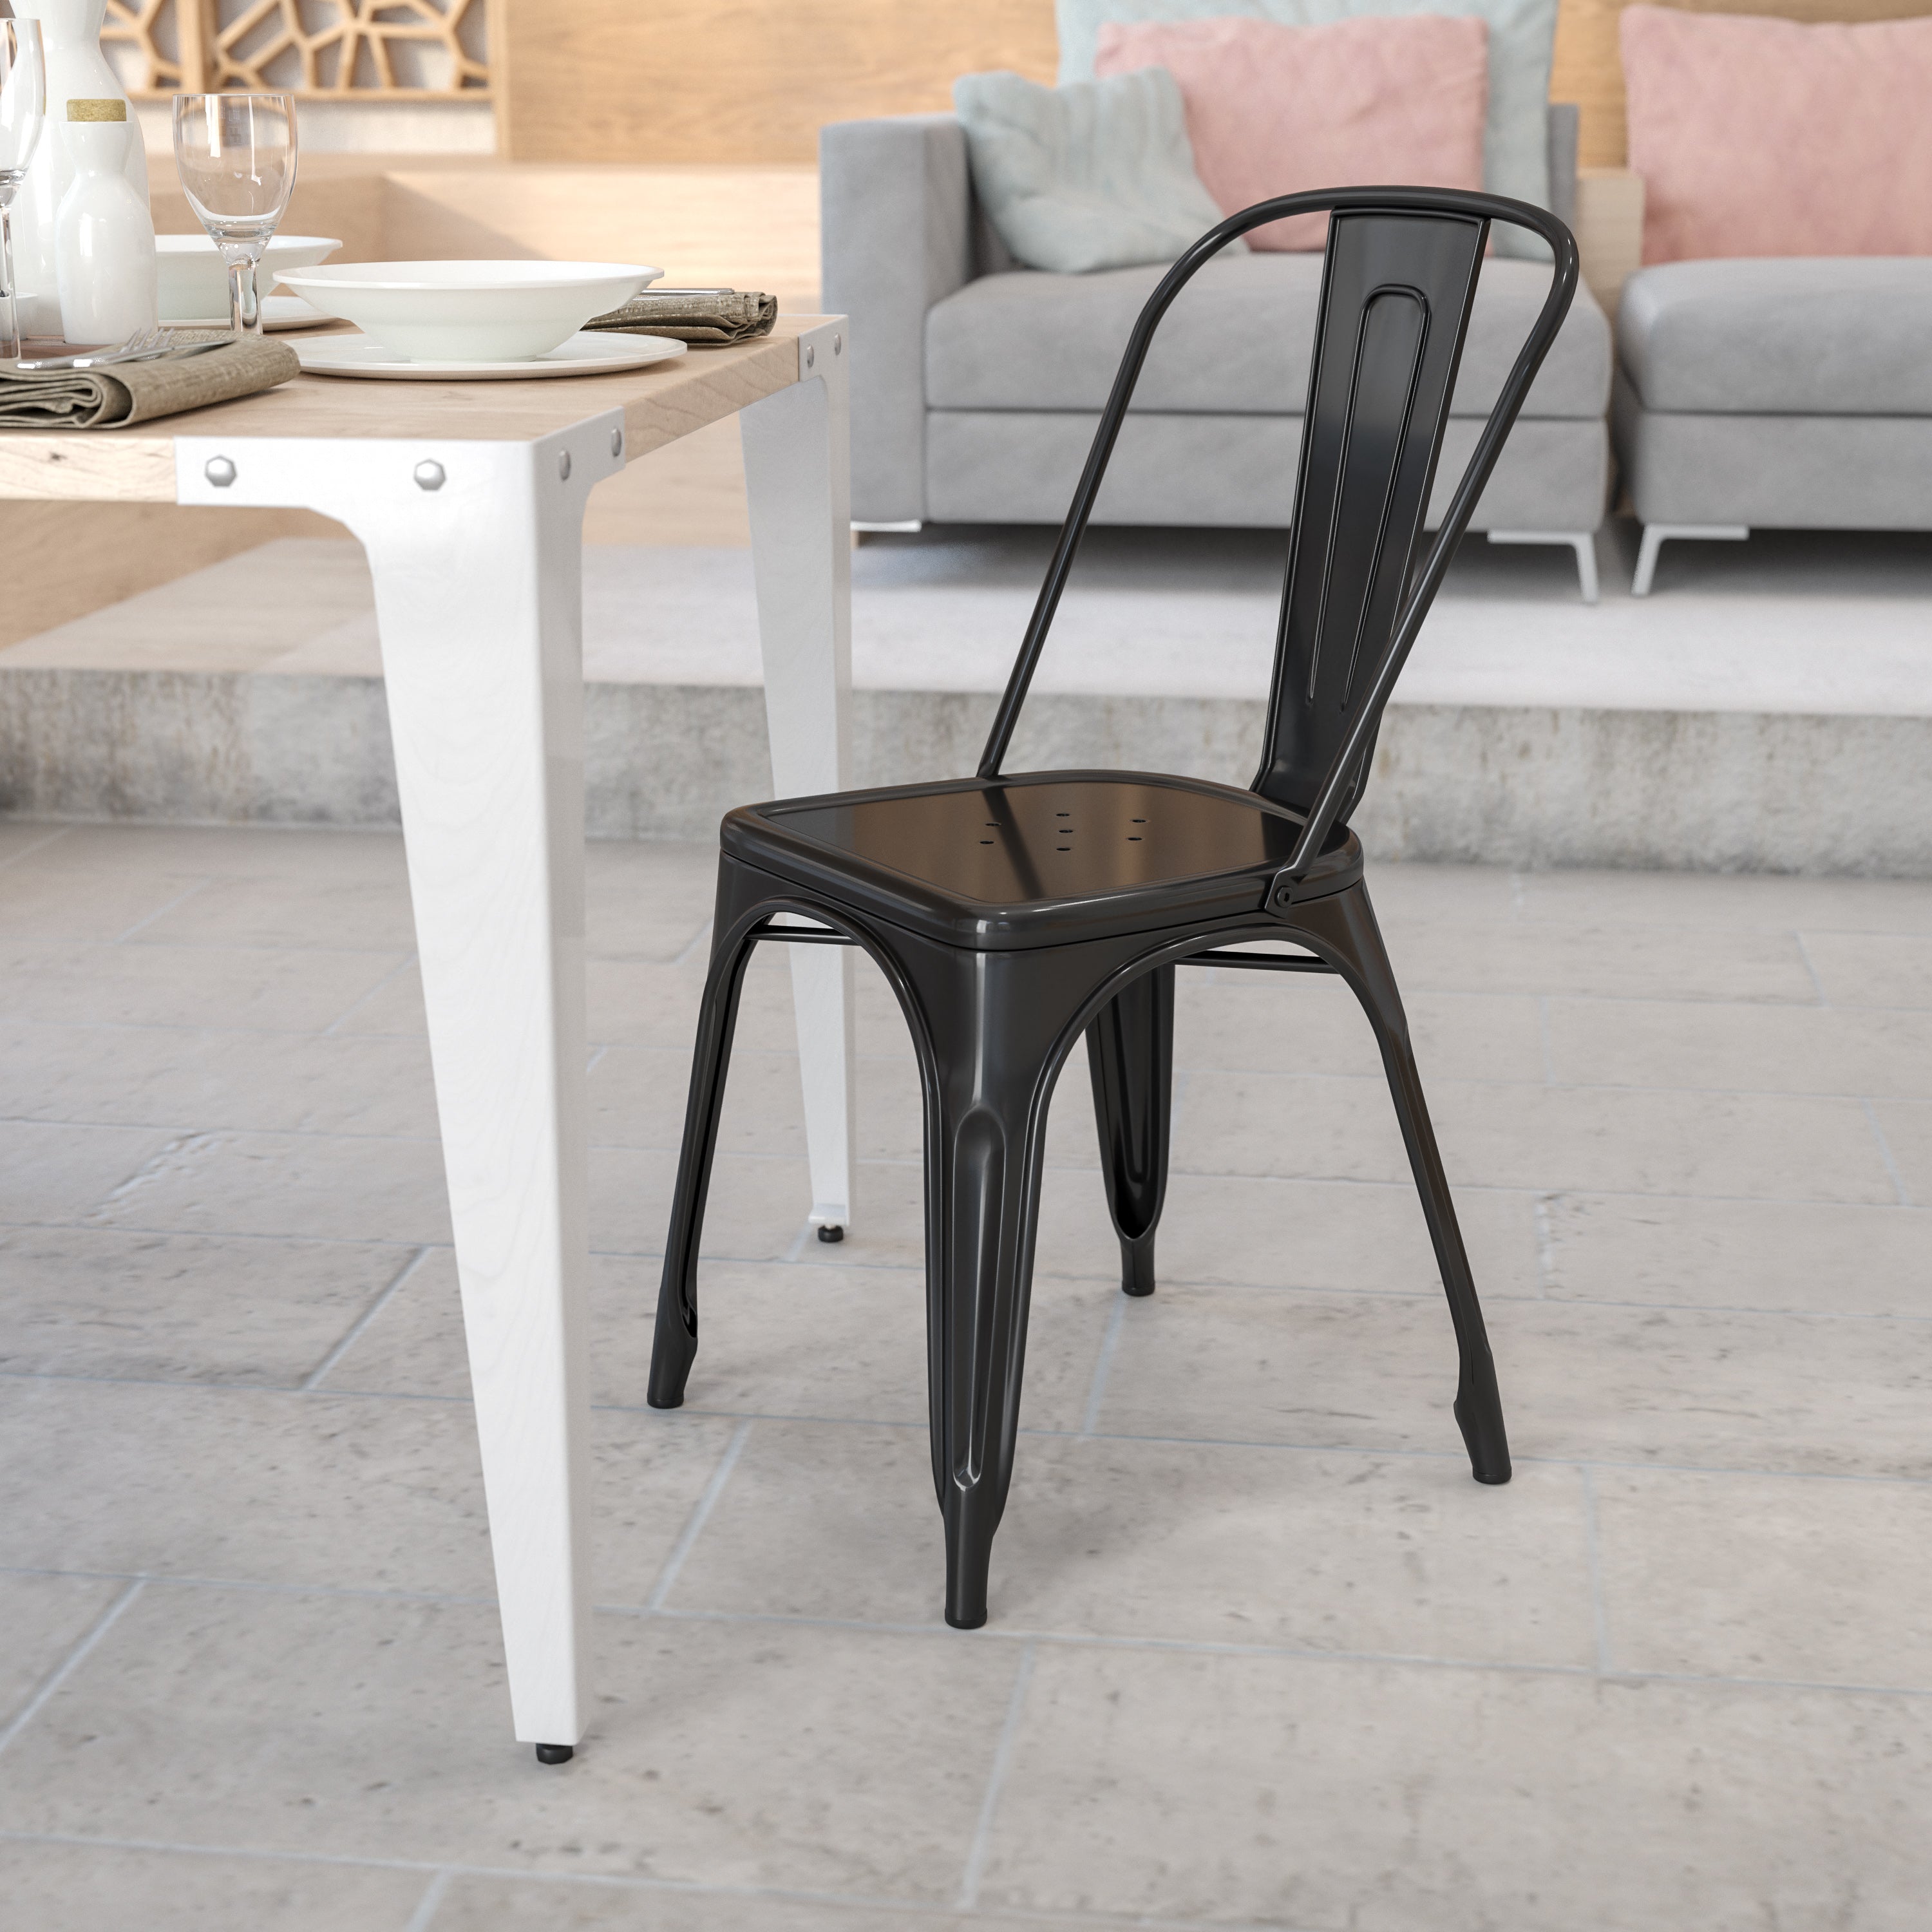 Commercial Grade Metal Indoor-Outdoor Stackable Chair-Indoor/Outdoor Chairs-Flash Furniture-Wall2Wall Furnishings